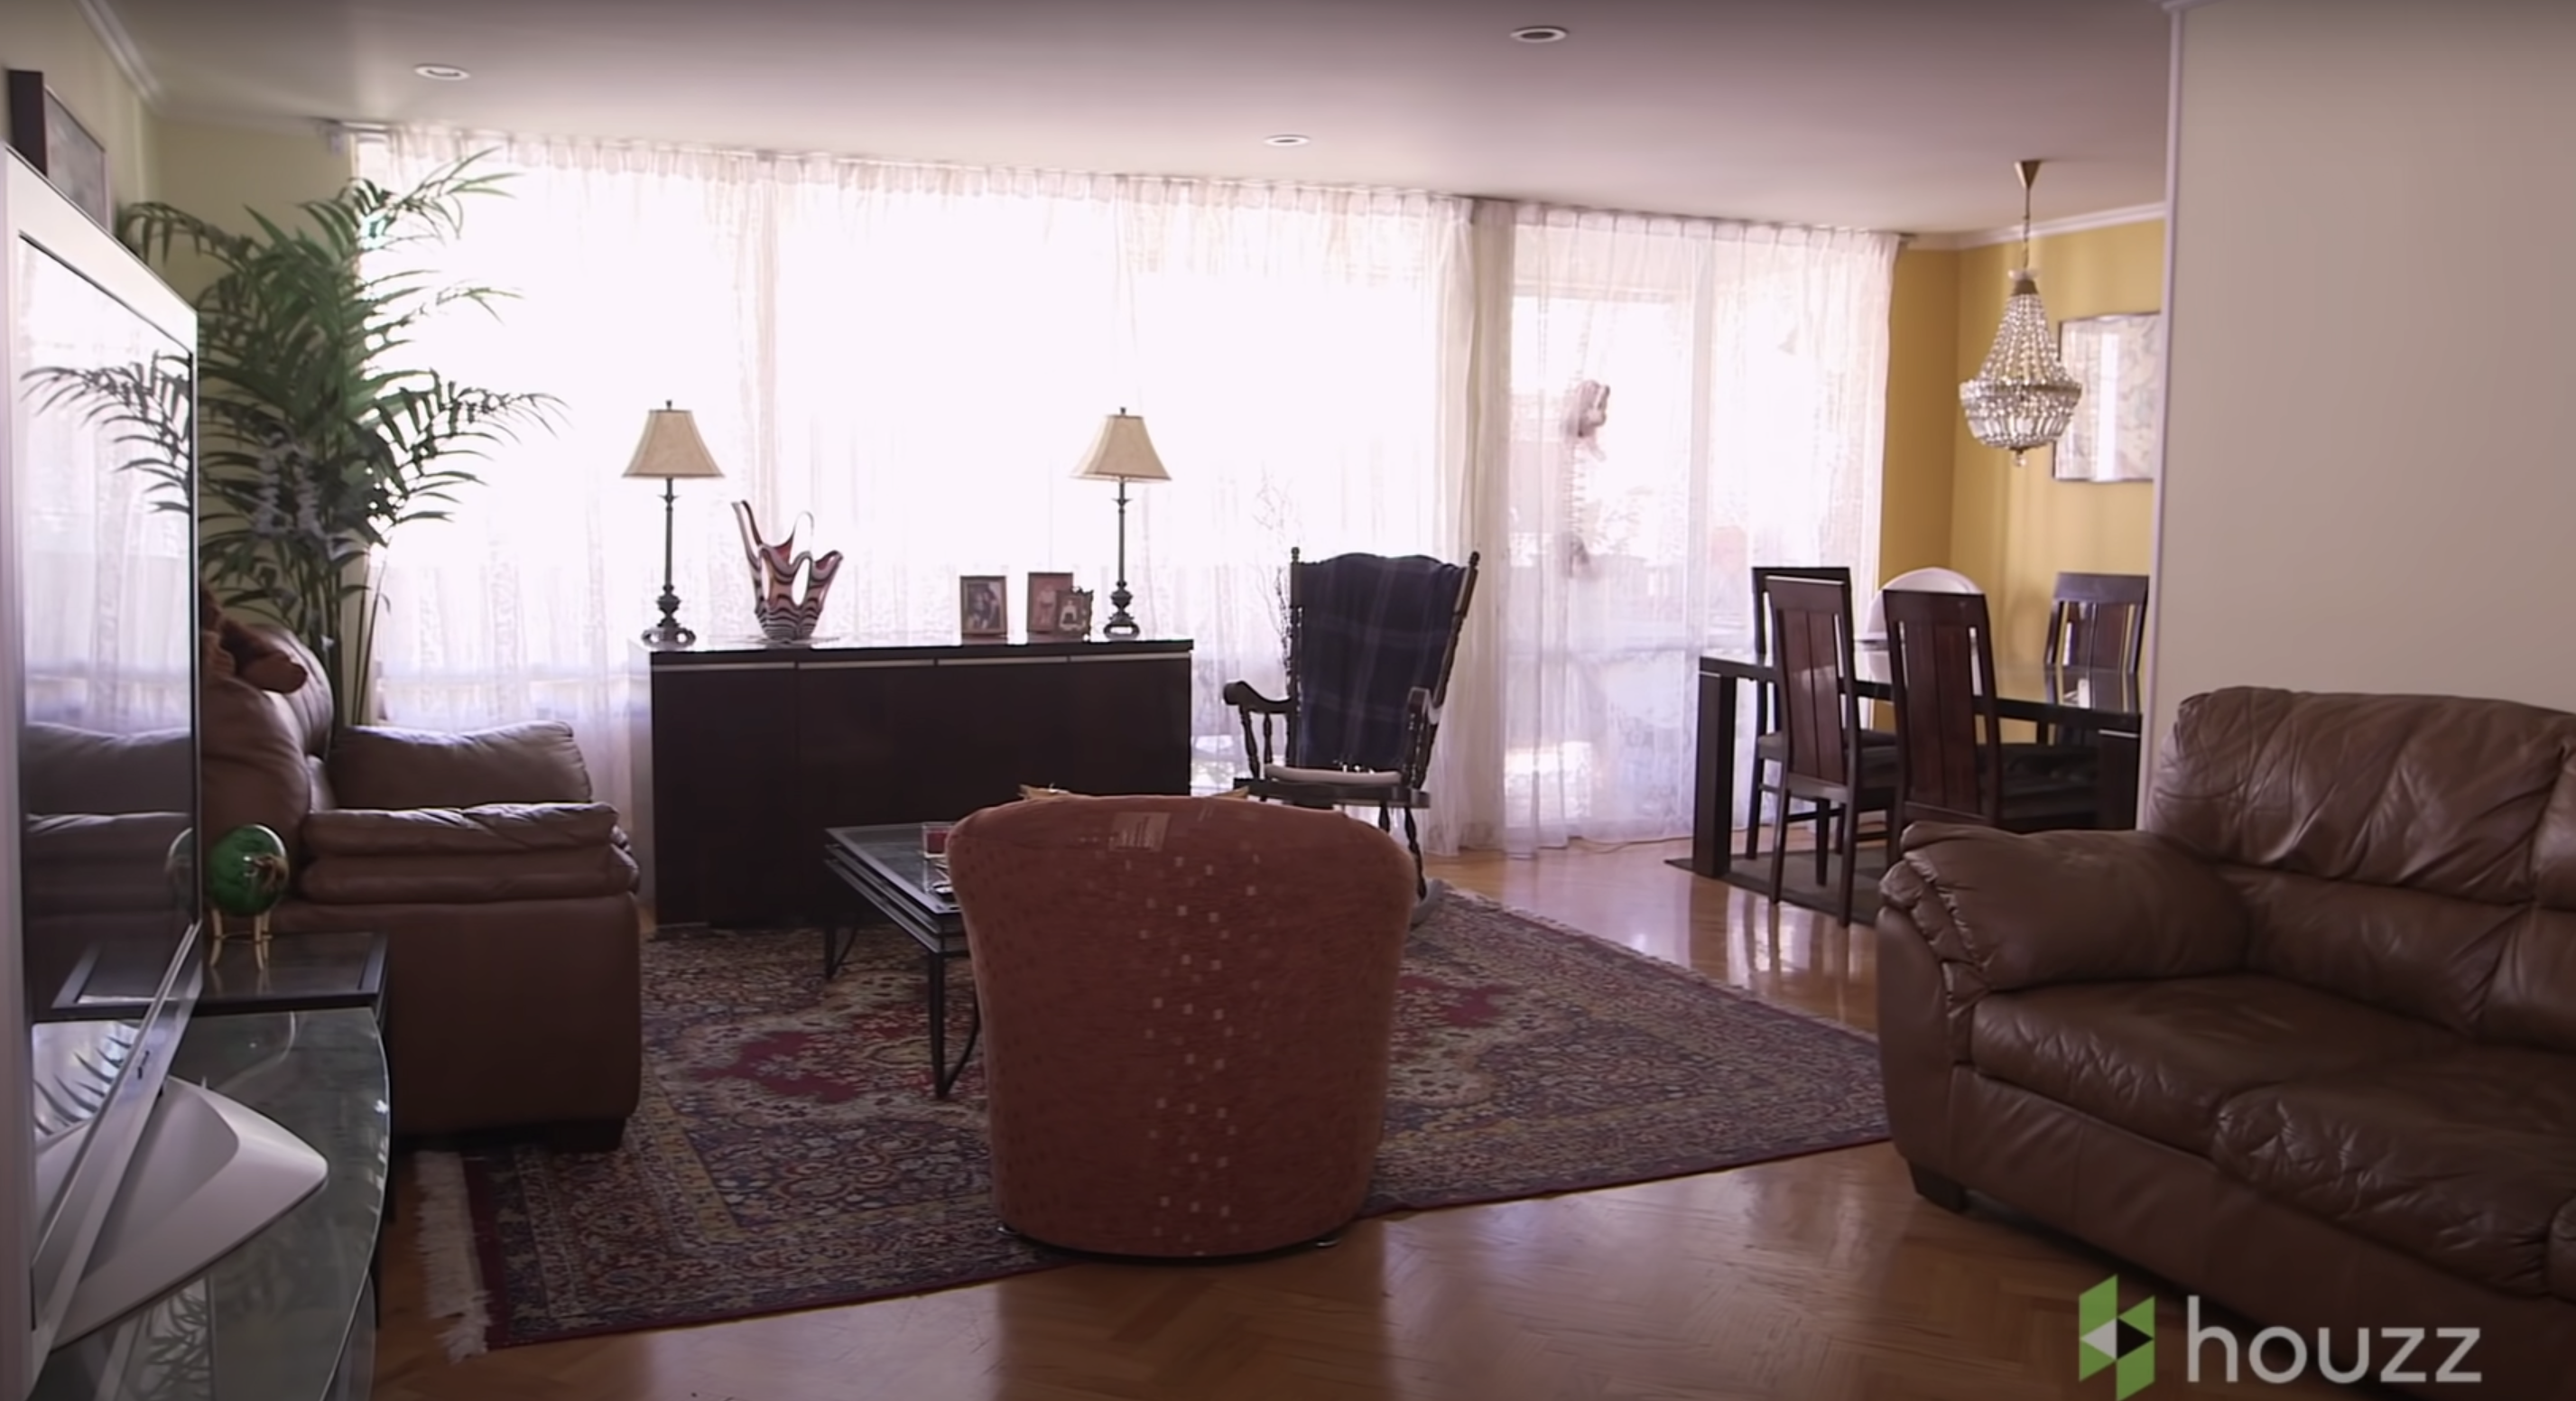 The dining area of Mila Kunis' parents' condo | Source: Youtube.com/HouzzTV